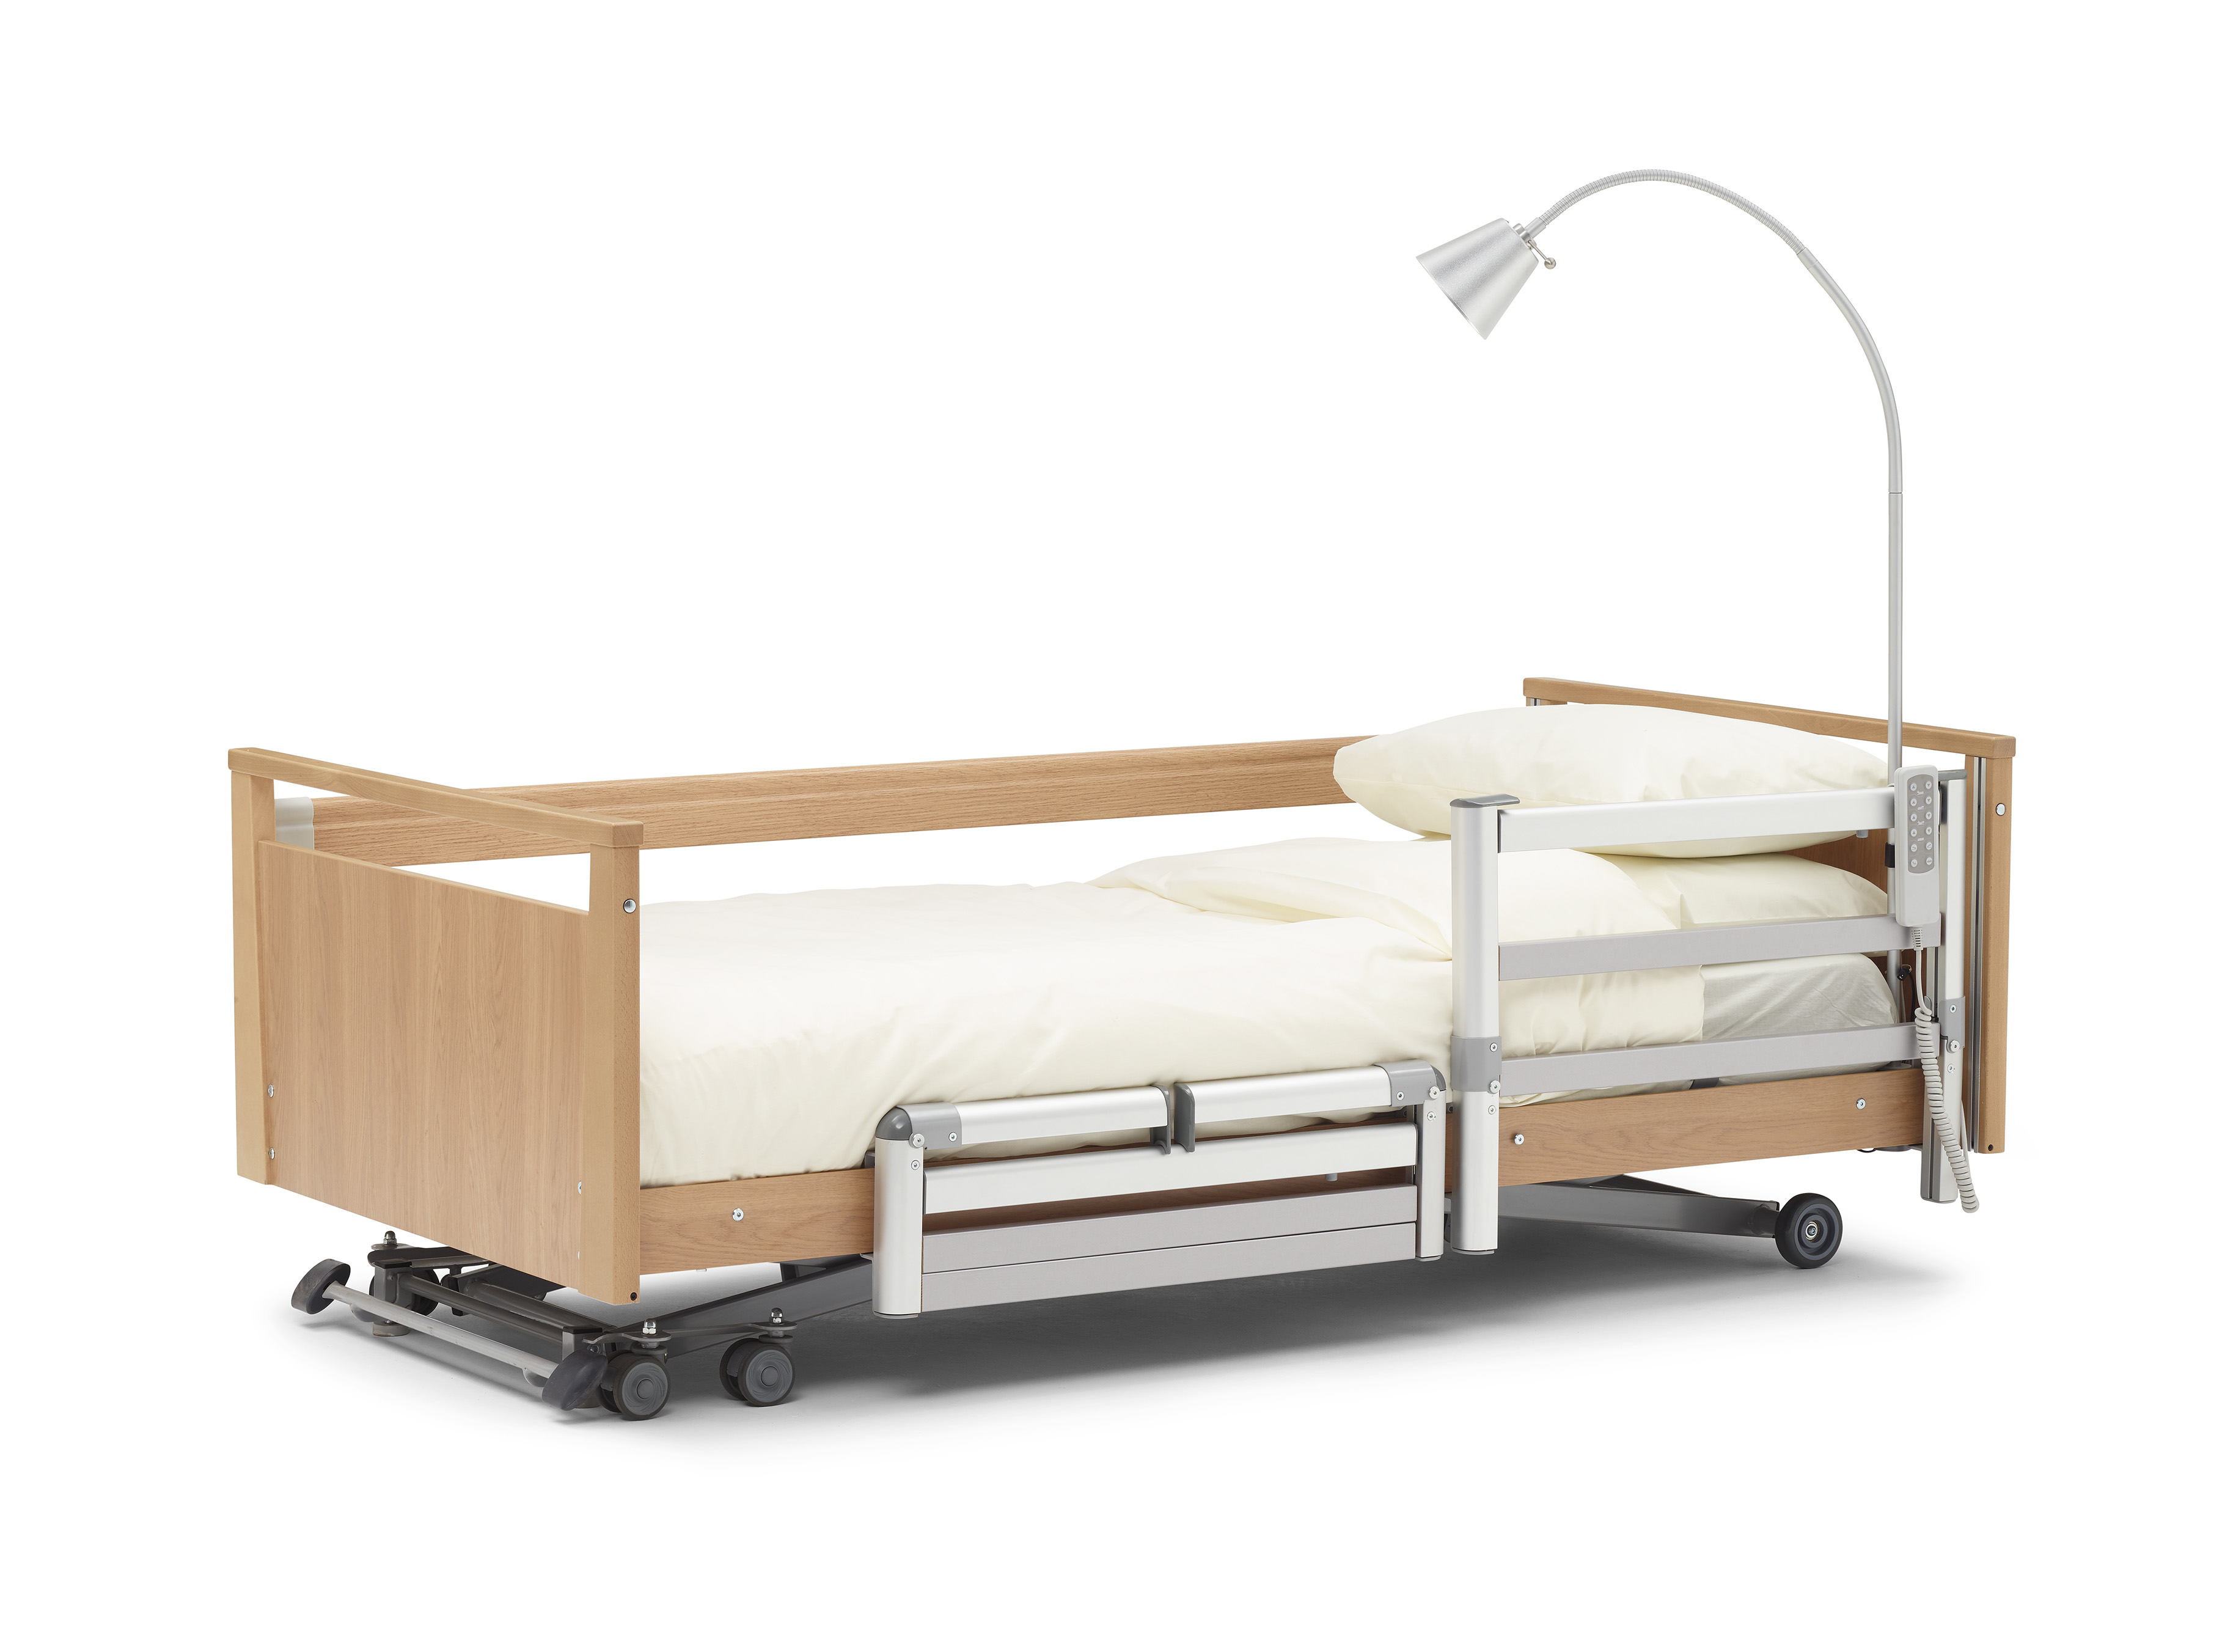 Impress 3 bed c/w Classic head/foot boards, side skirts and 4 x aluminium split side rails
Finish: Light Sorano Oak